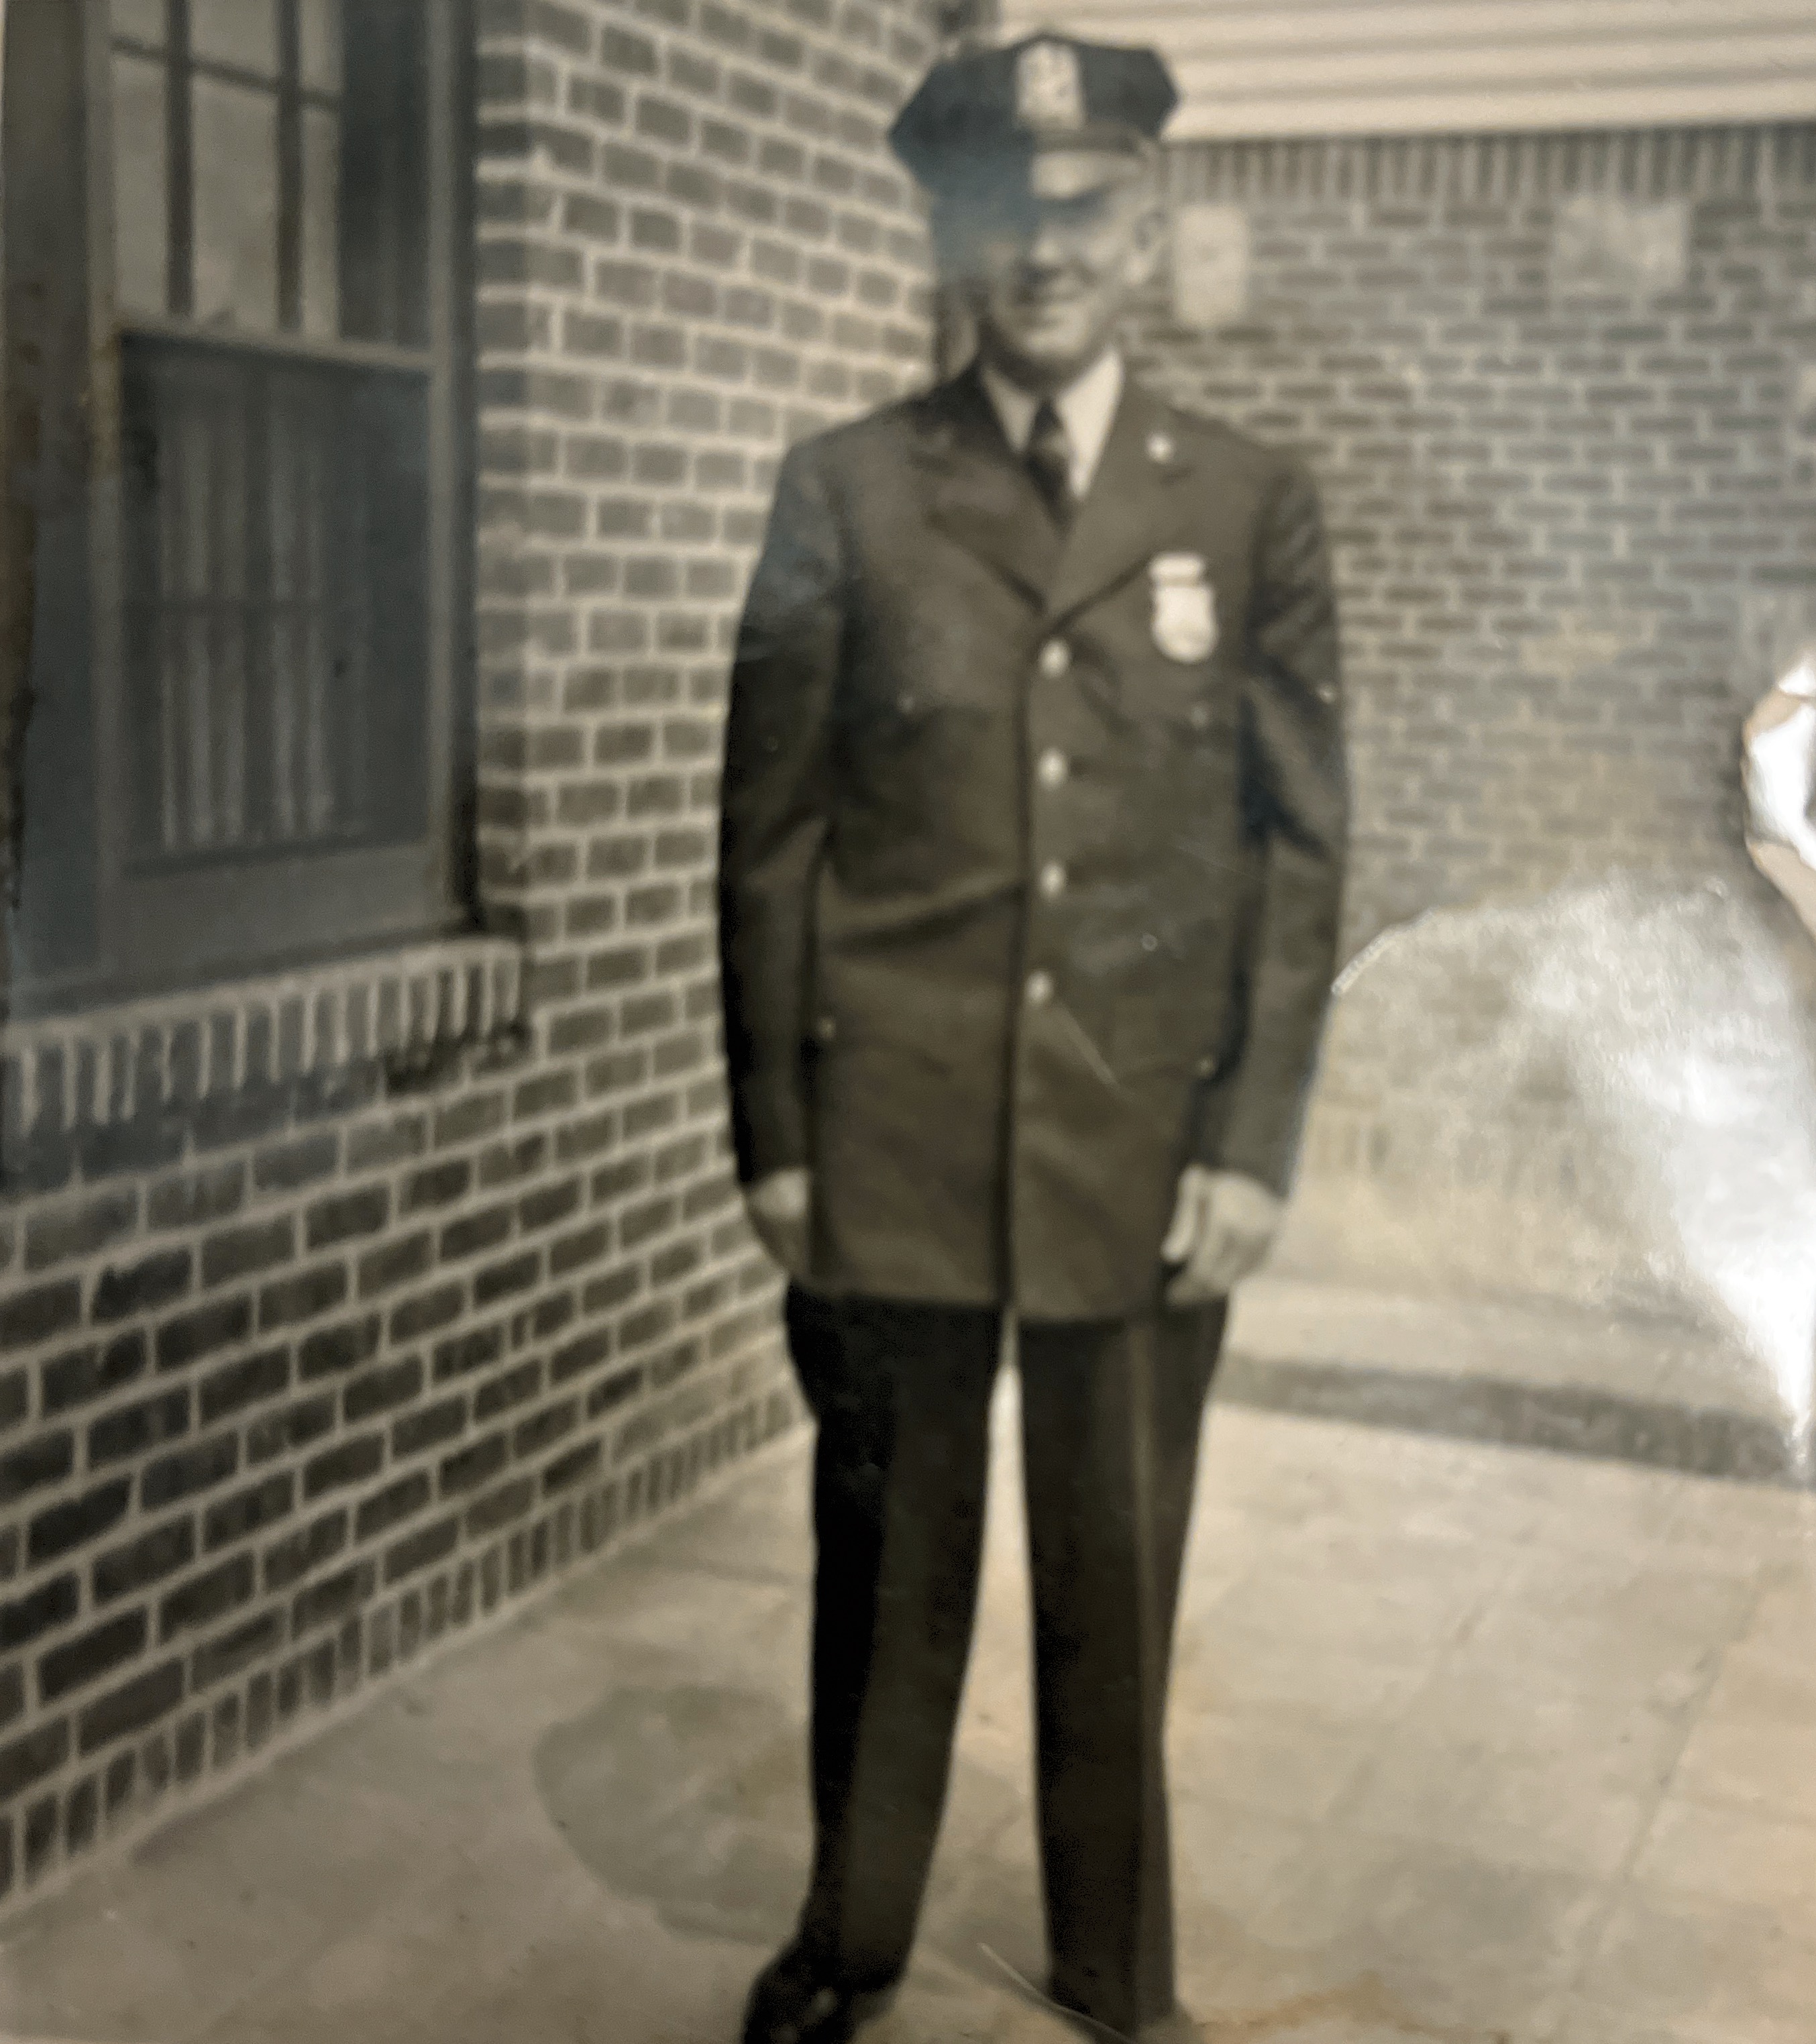 My granddad William Milbury. NYPD 1918-1947